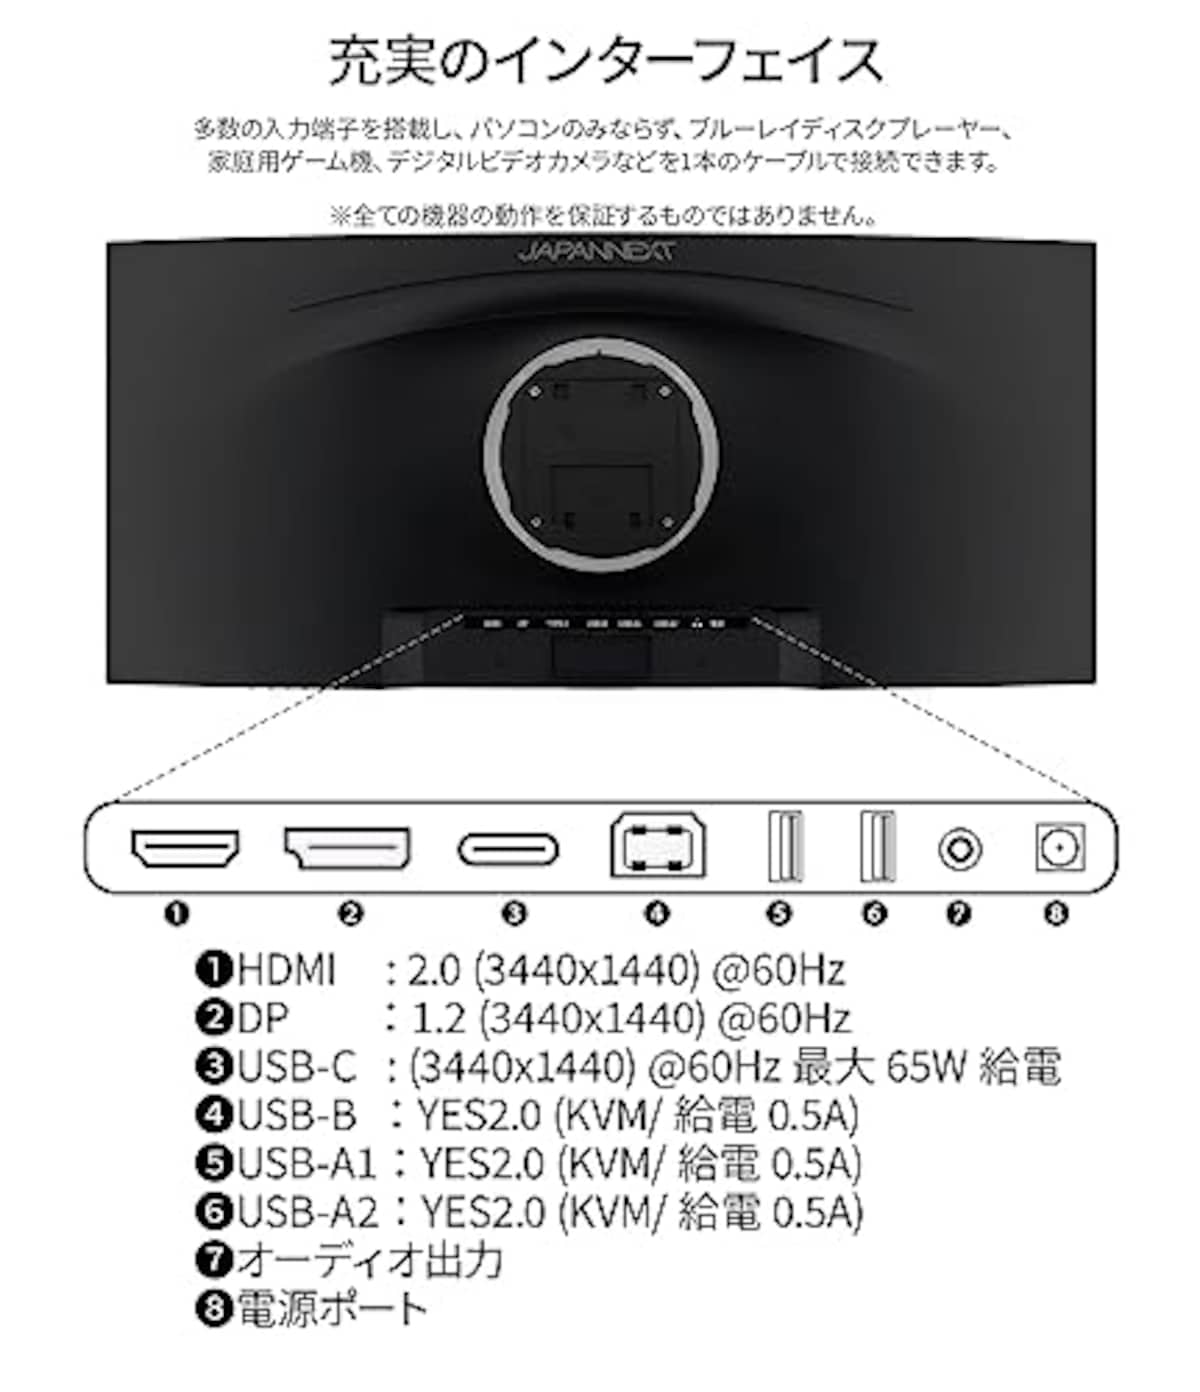  JAPANNEXT 34インチ曲面 IPSパネル UWQHD(3440 x 1440)解像度 ウルトラワイドモニター JN-IPSC34UWQHDR-C65W-H USB-C給電（最大65W） HDMI DP KVM機能 sRGB99% 昇降式スタンド画像6 